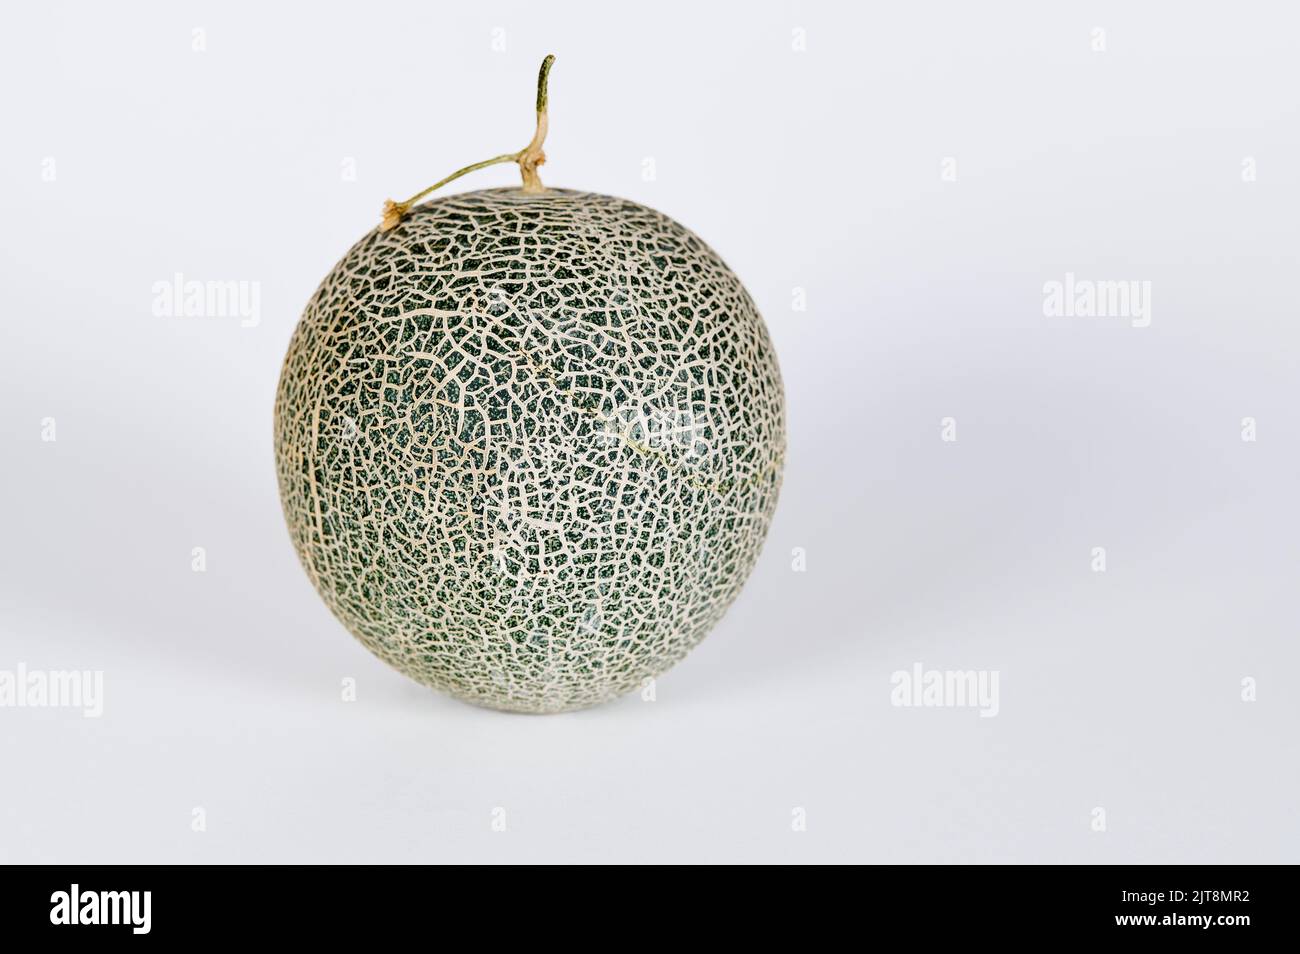 Single Cantaloupe melon on a white background Stock Photo